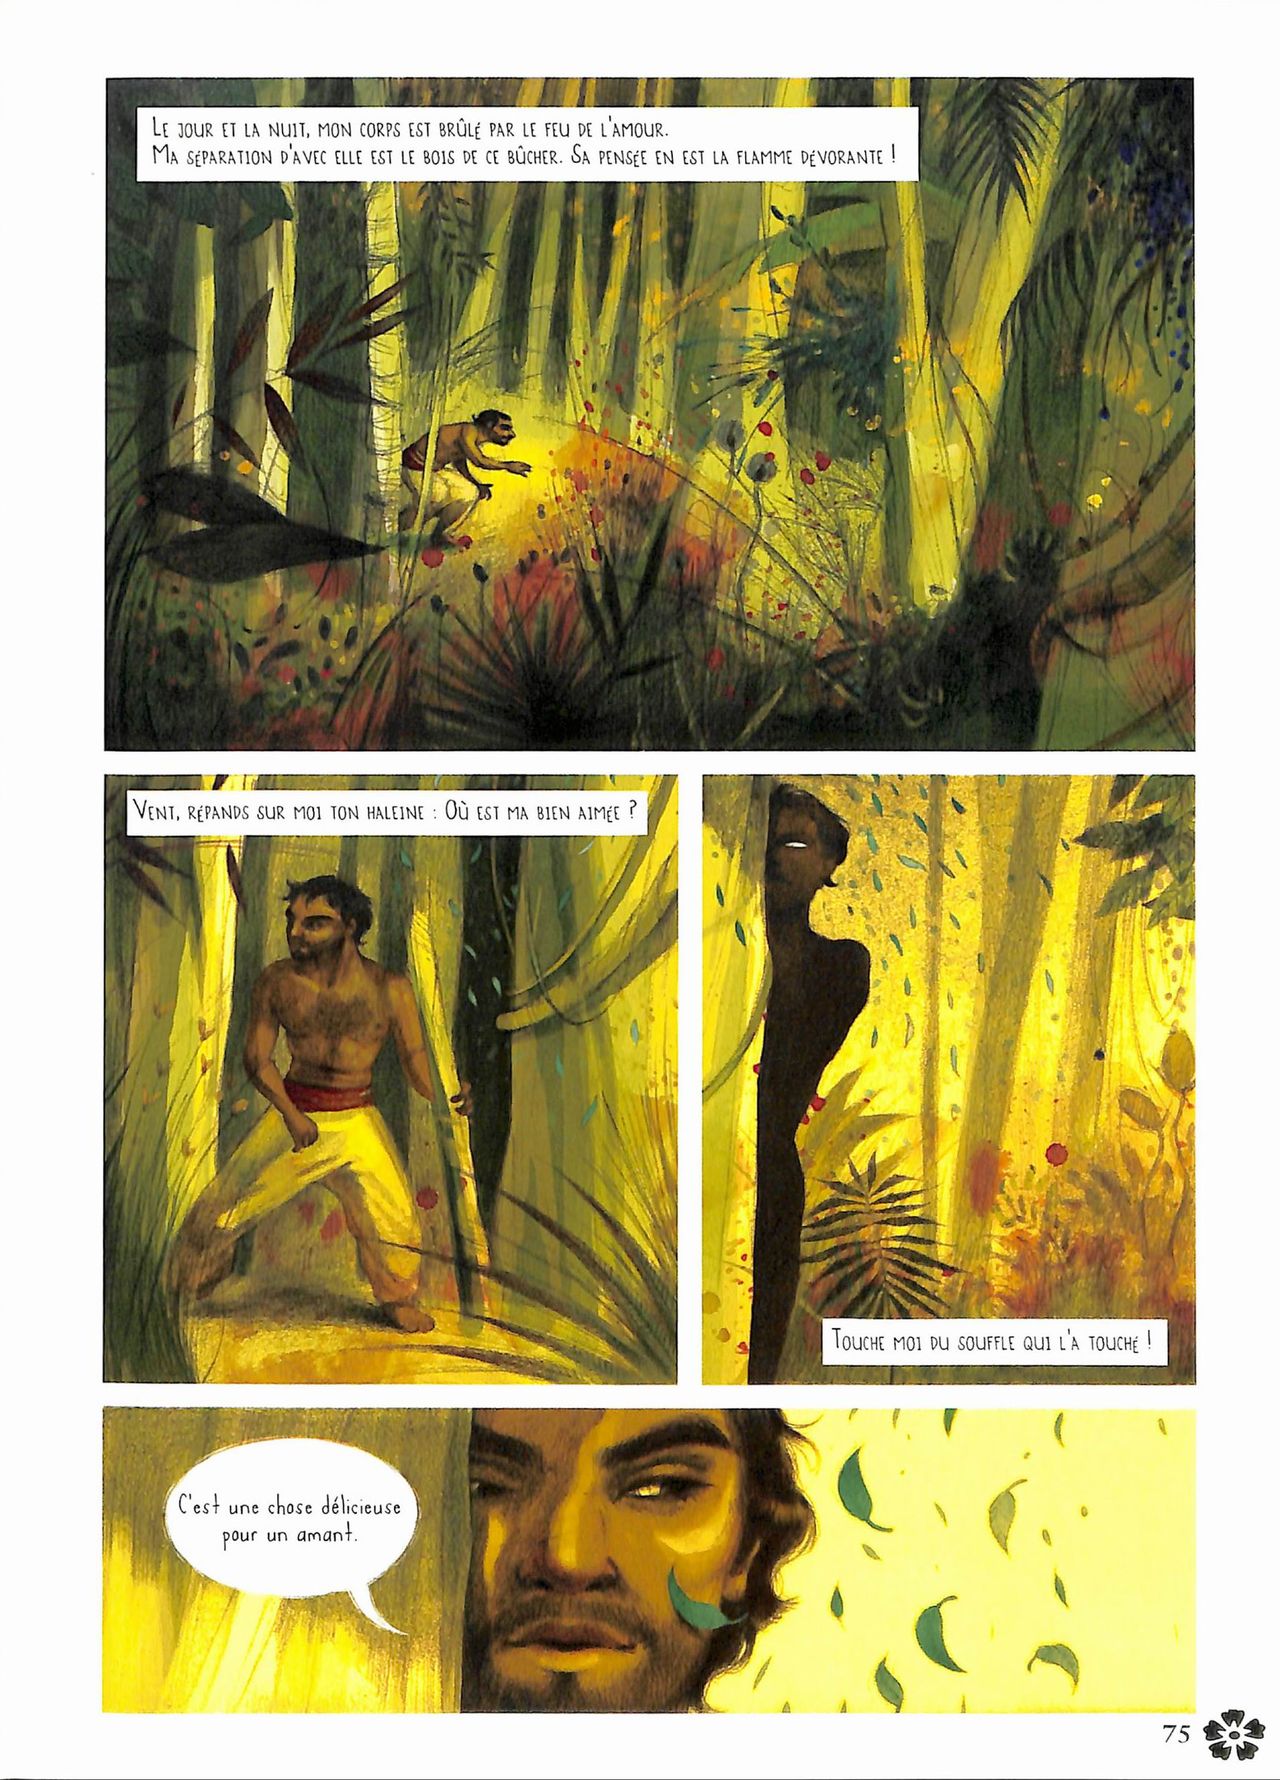 Kama Sutra en bandes dessinées - Kama Sutra with Comics numero d'image 76